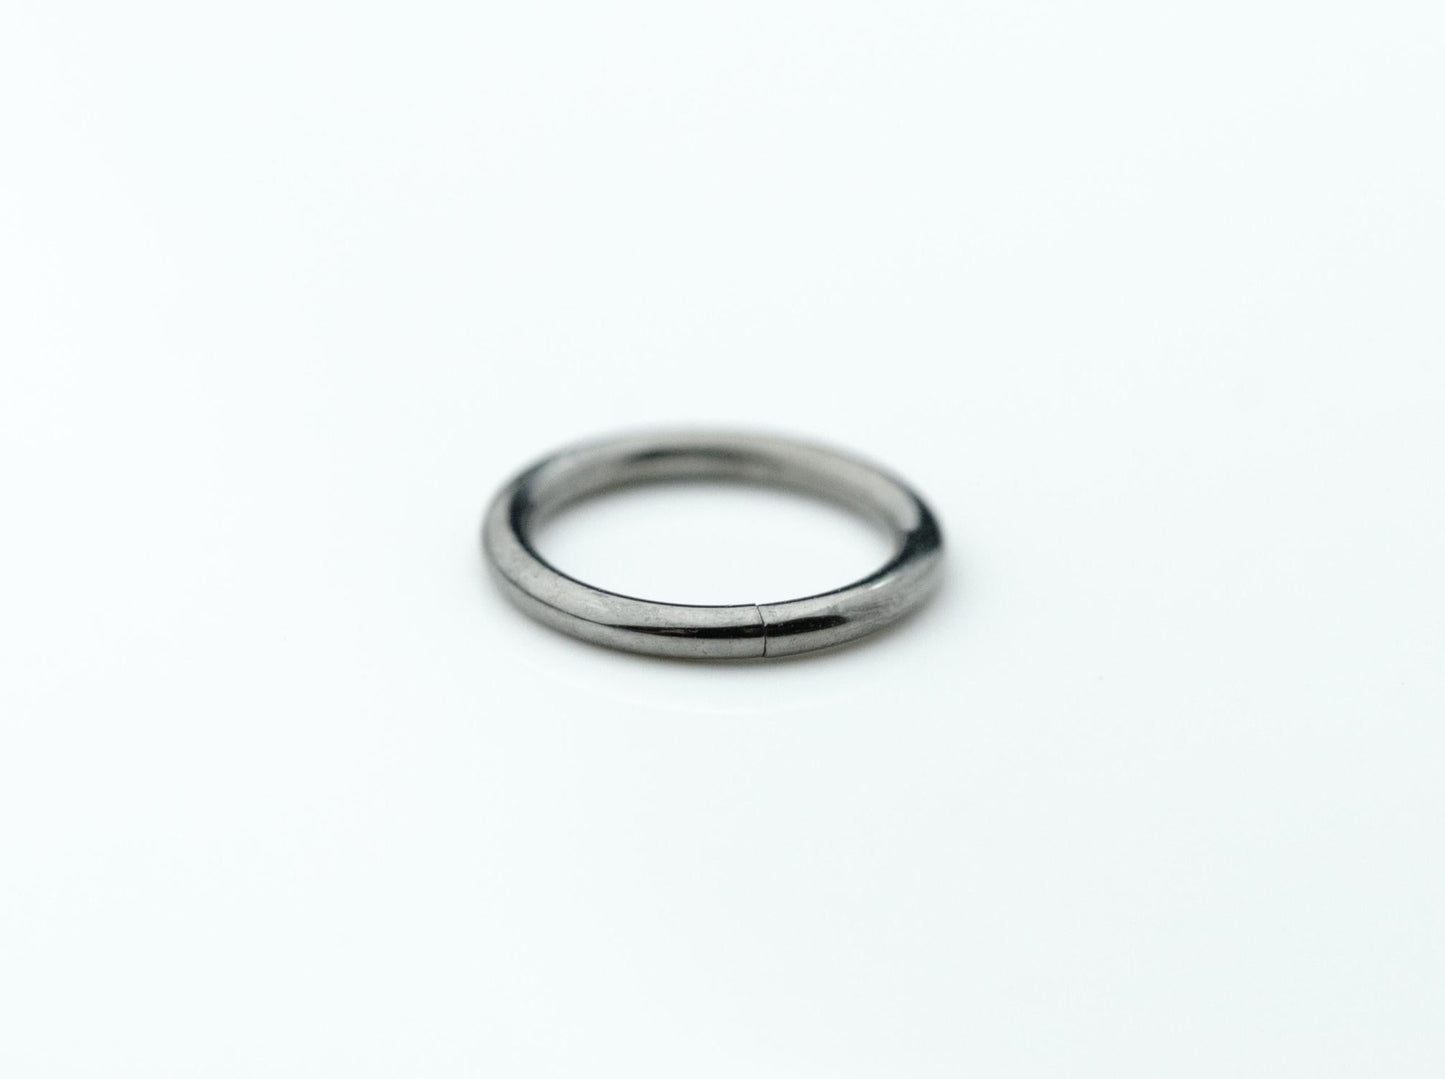 Seam Ring in 14k White Gold w/Black Rhodium plating by BVLA